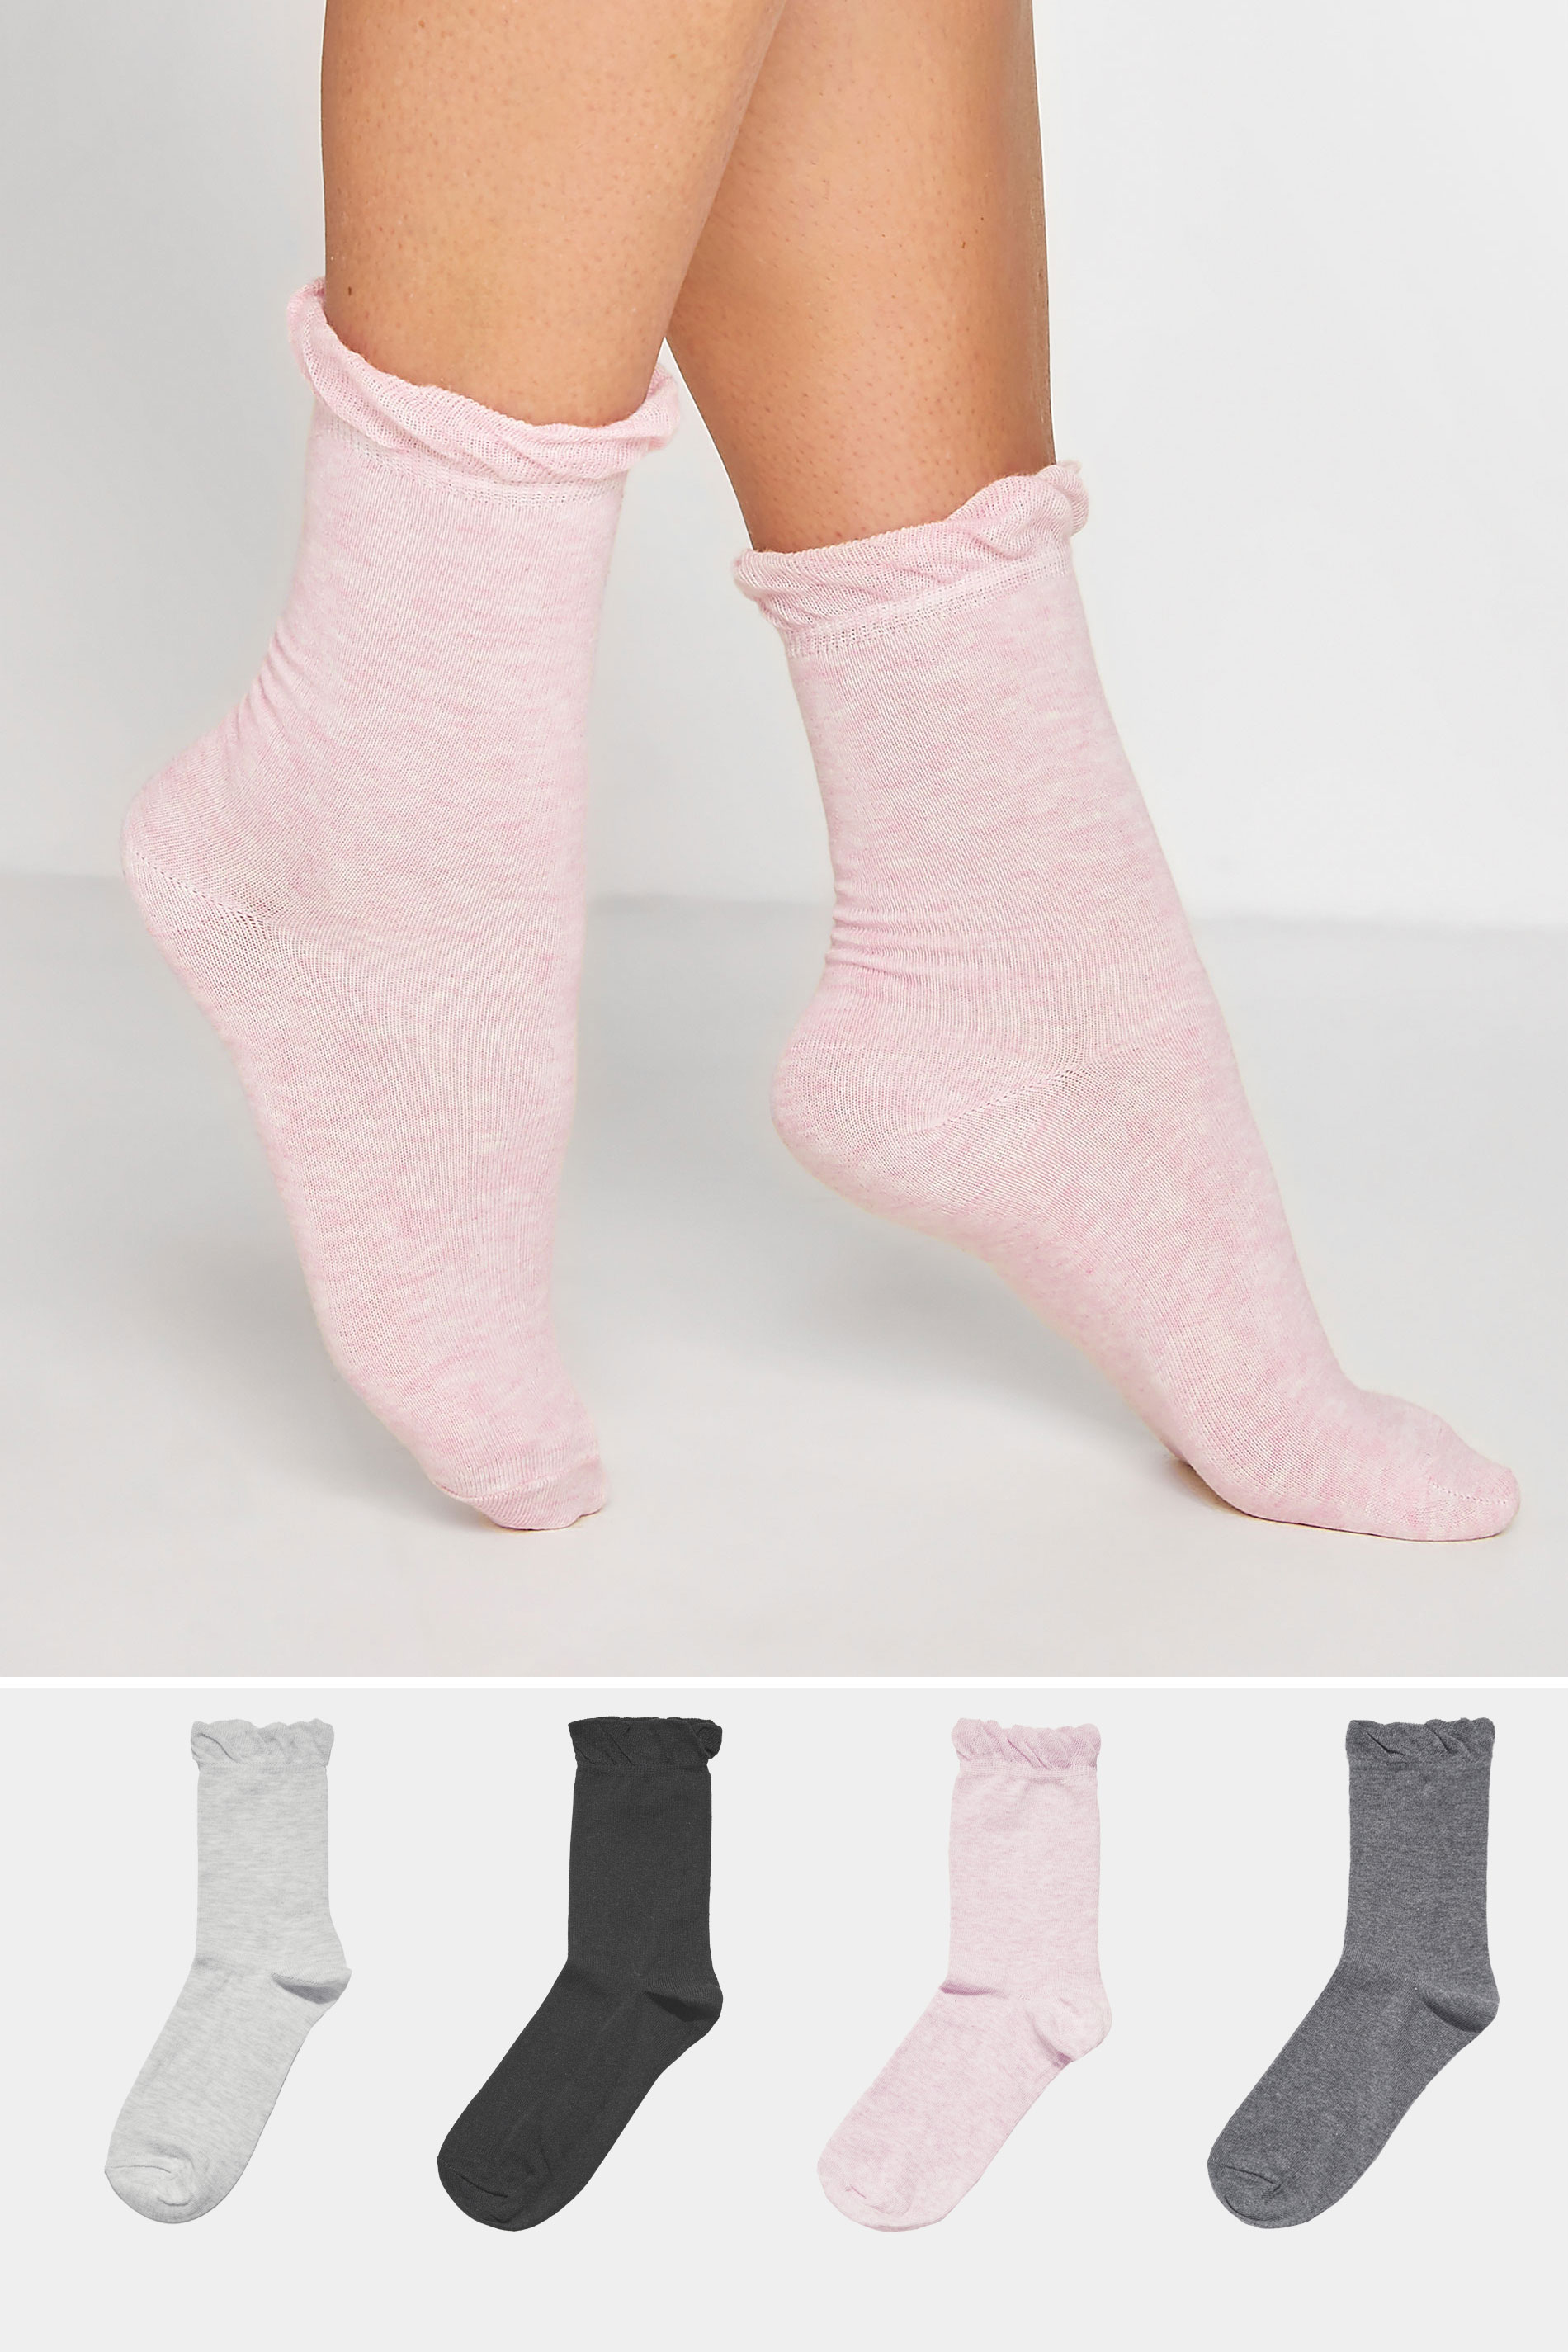 4 PACK Grey & Pink Ankle Socks 1